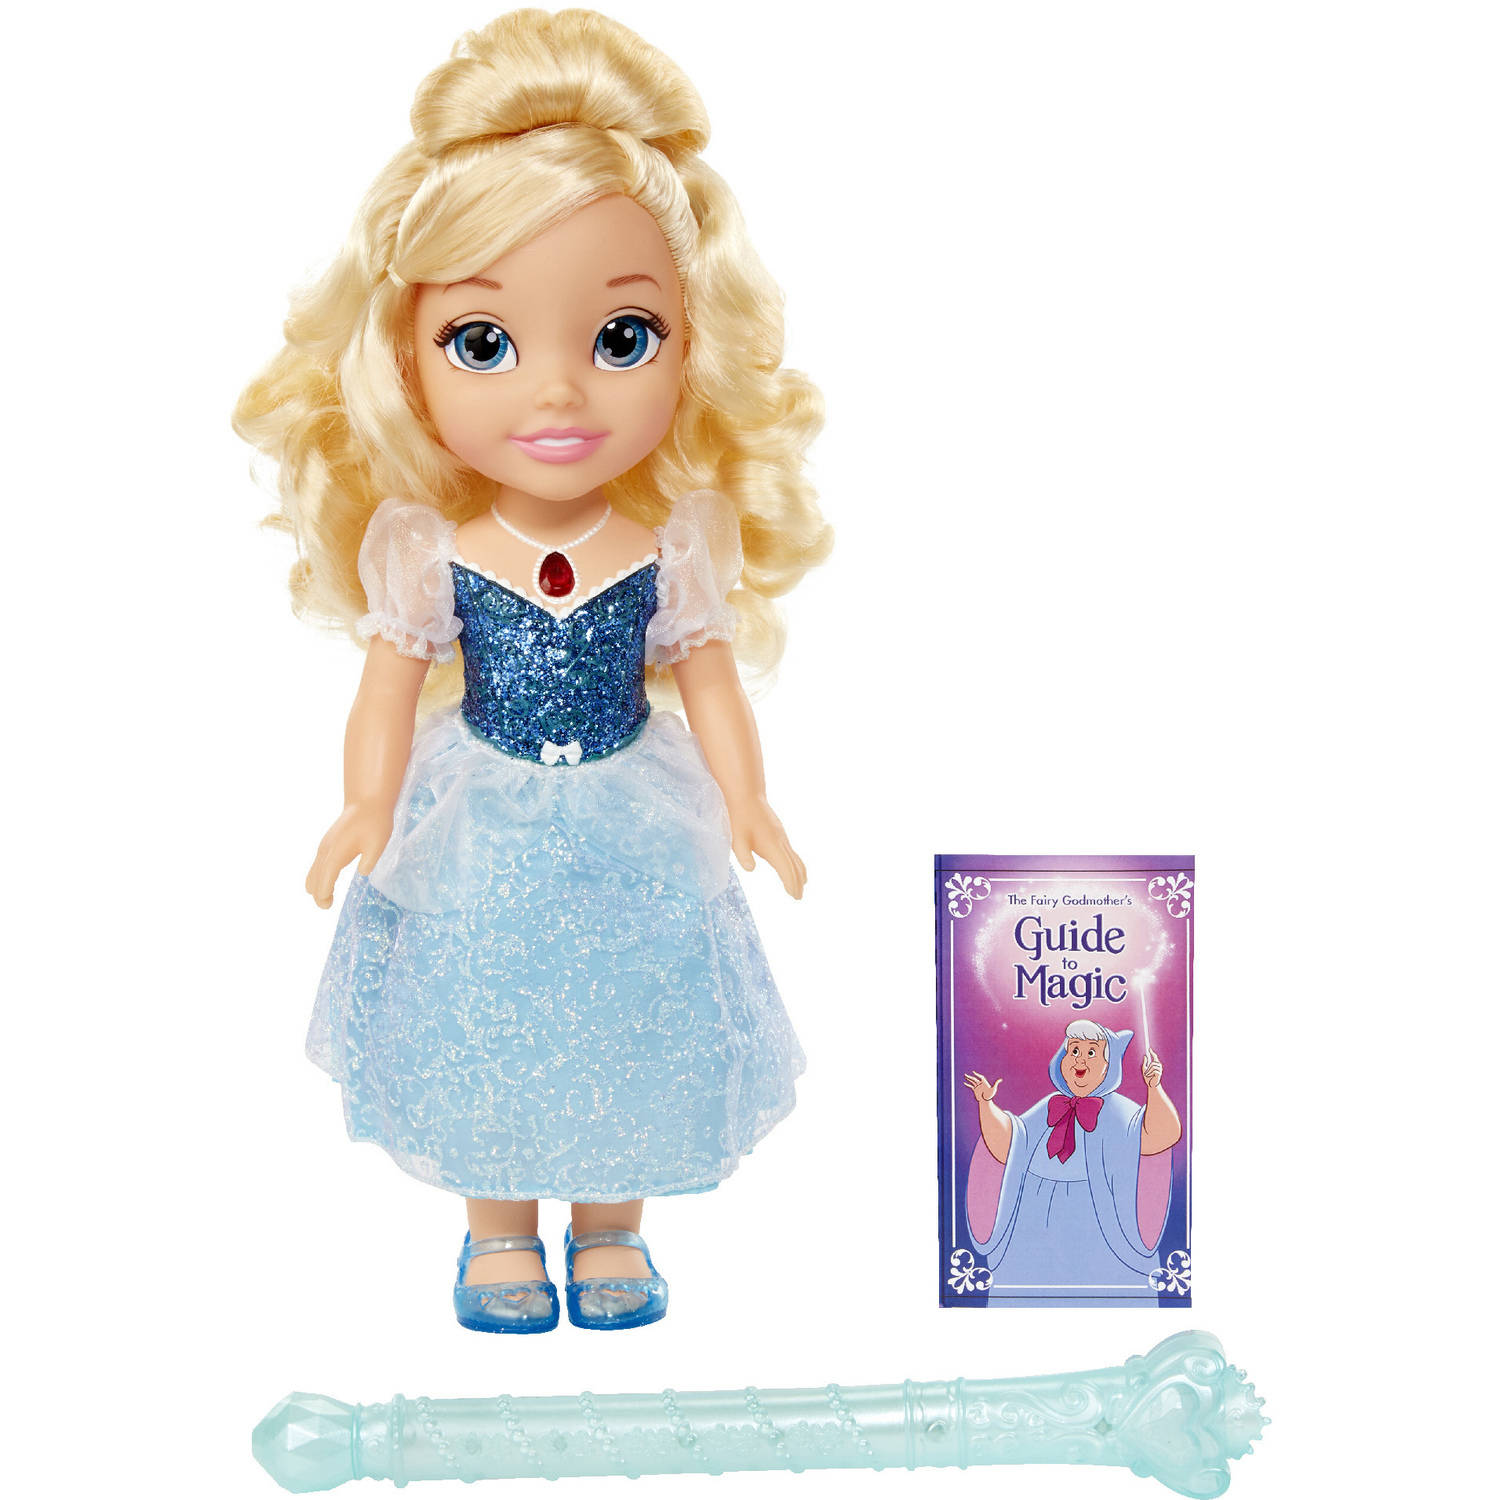 Disney Magical wand Cinderella Doll - image 1 of 3